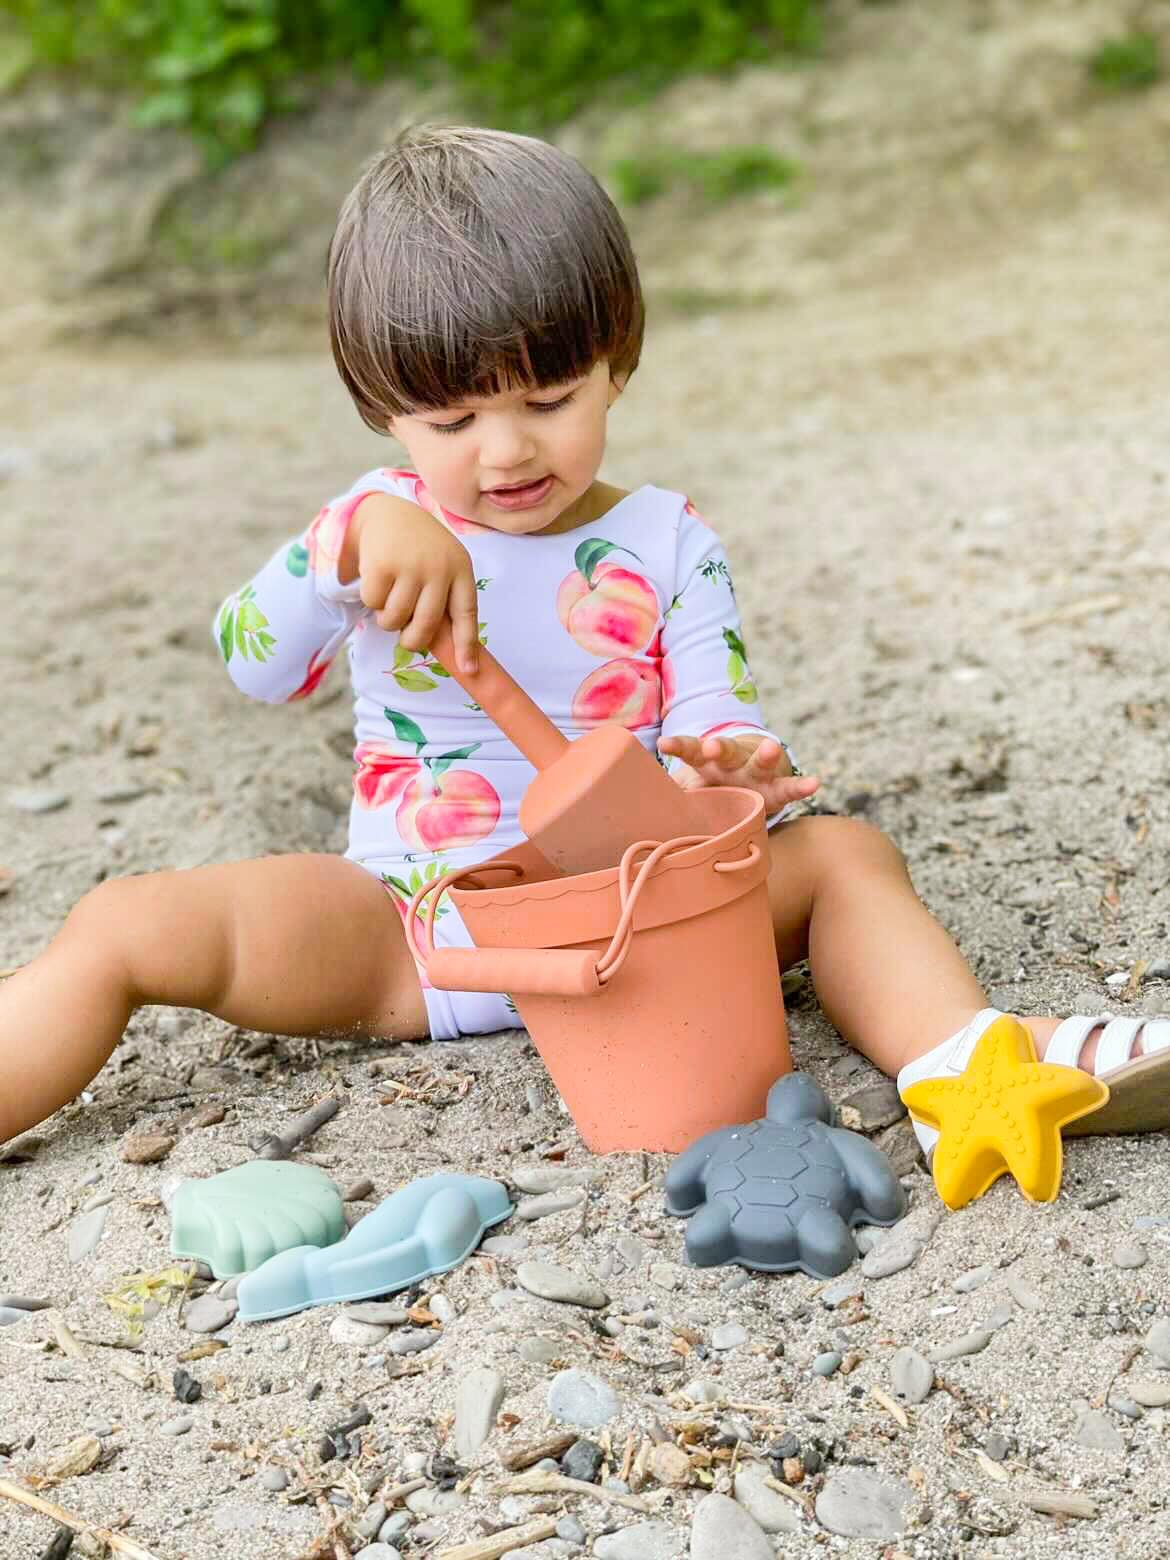 Beba Beach Sand Toys - Beba Canada